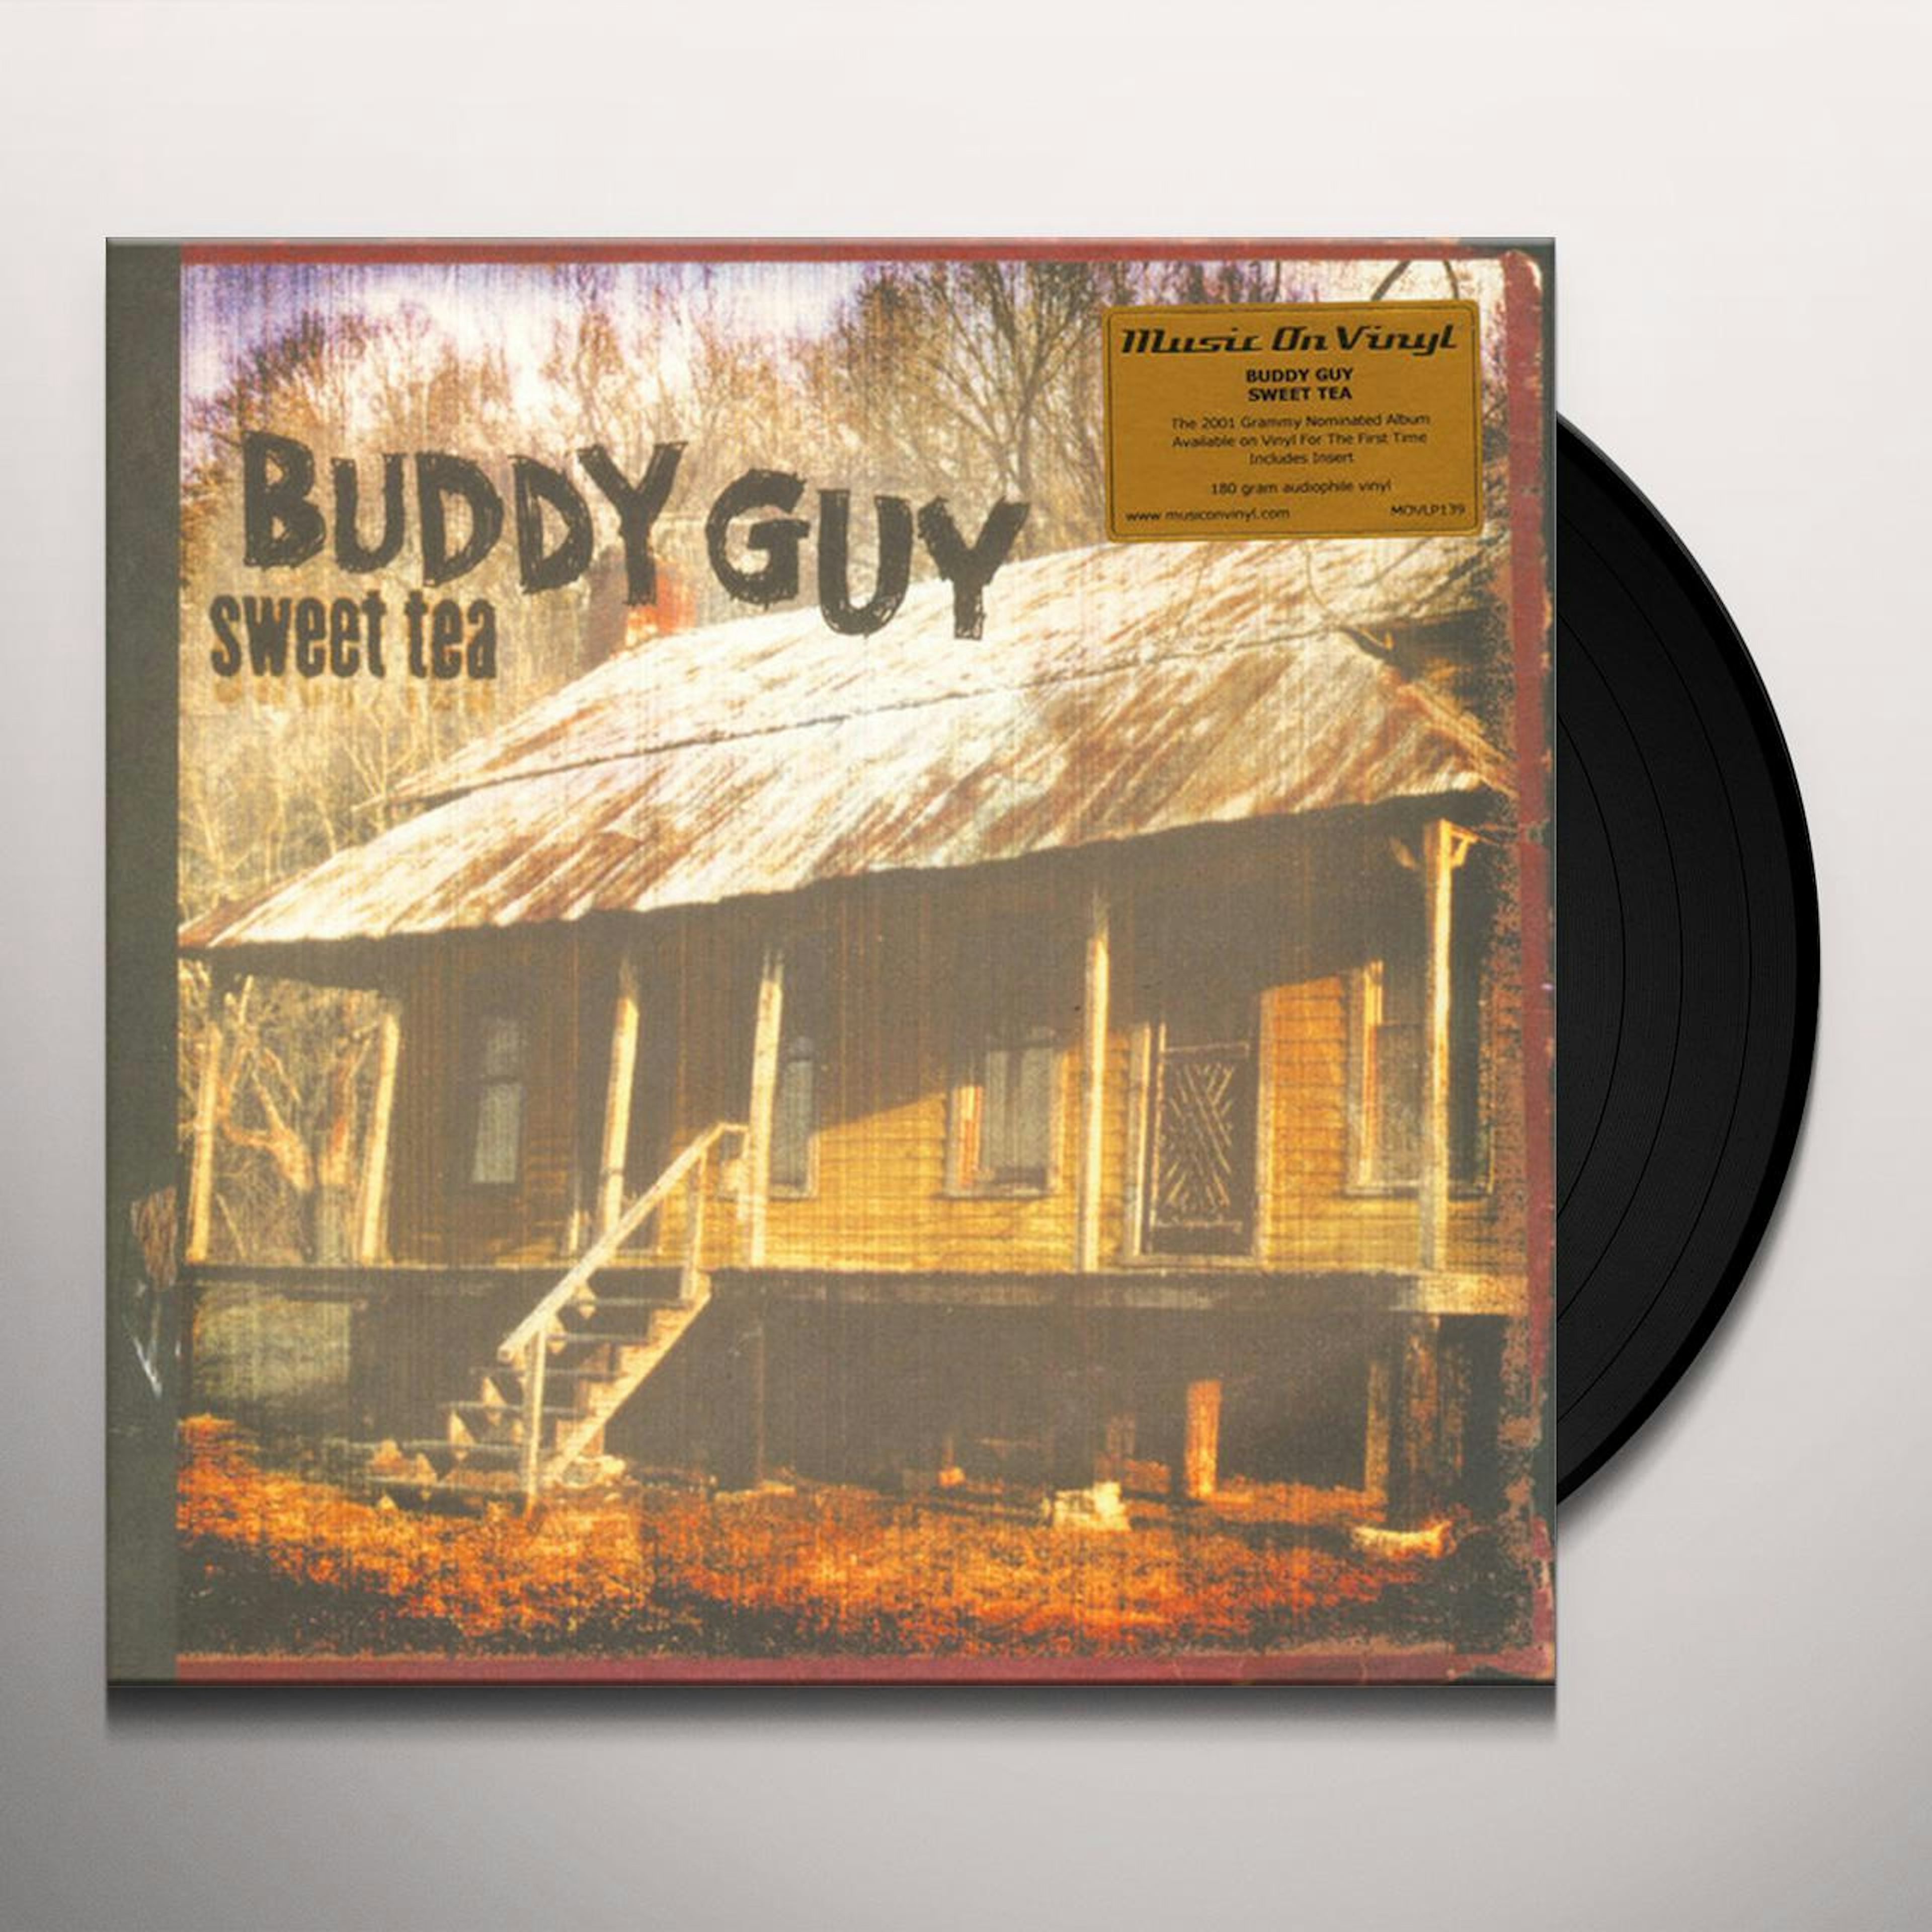 Buddy Guy Tea Vinyl Record